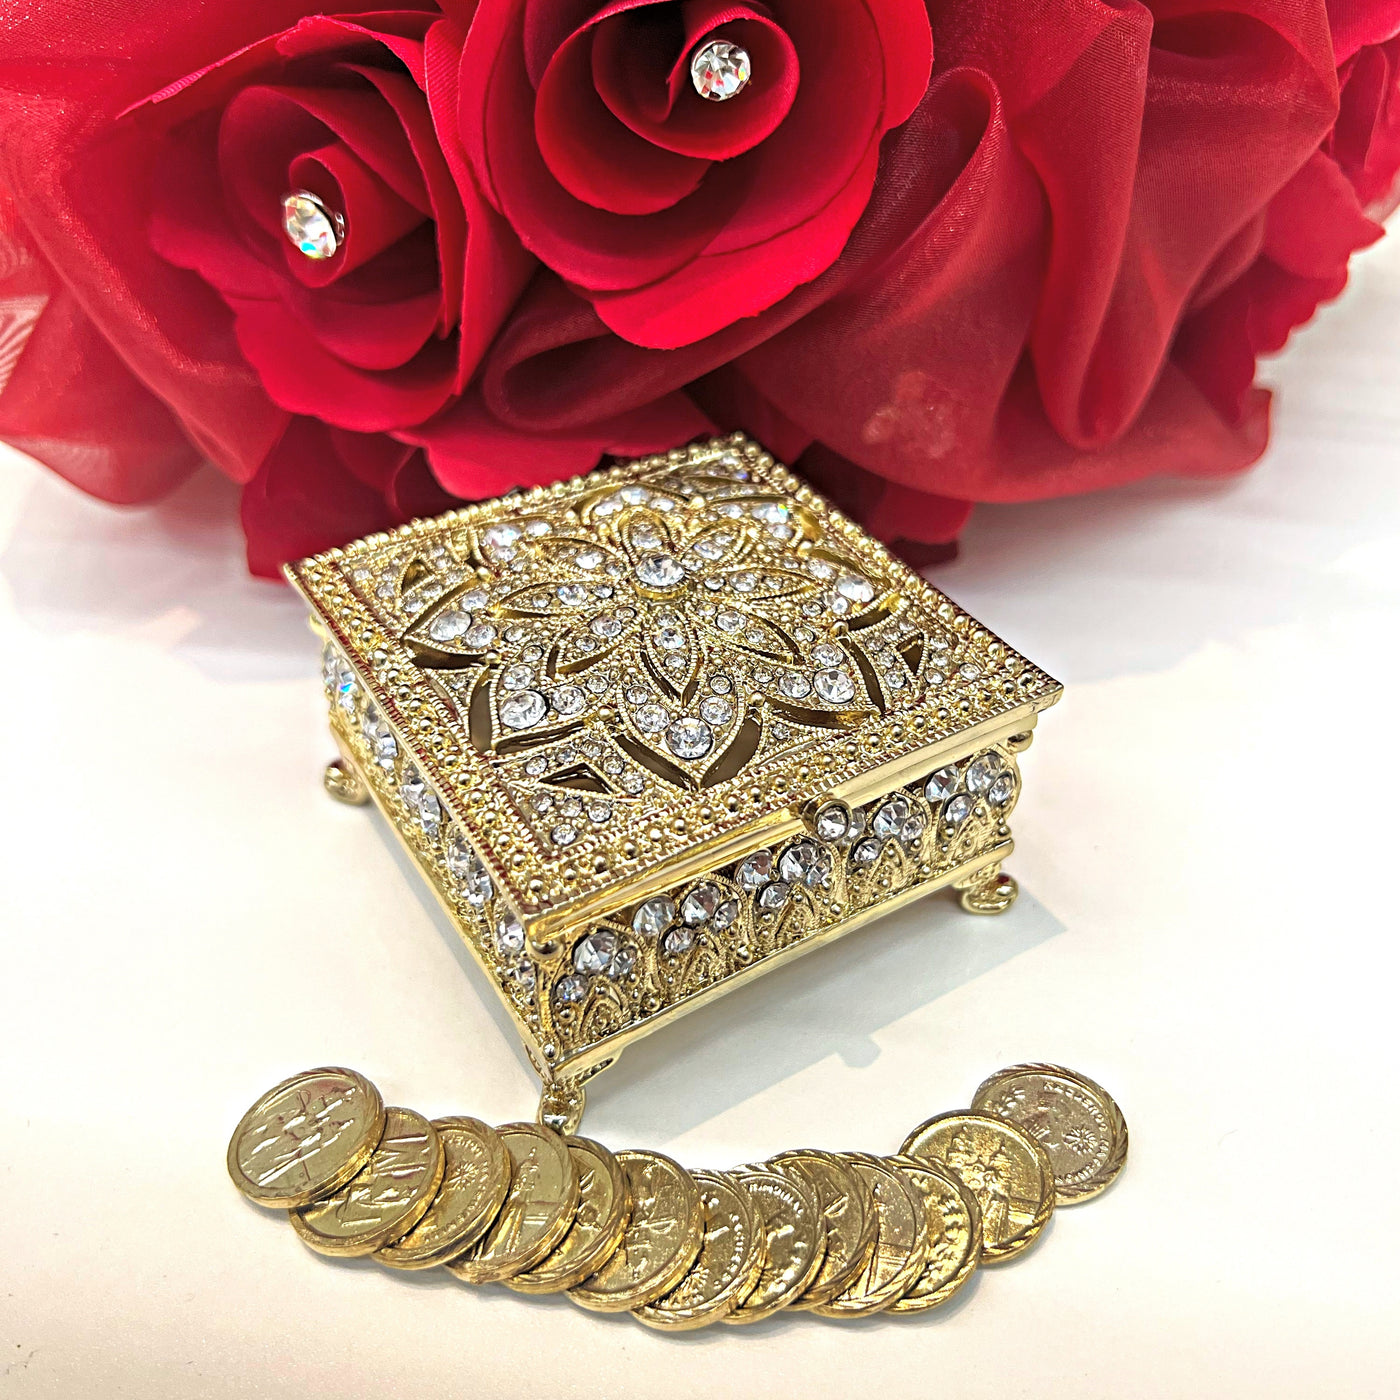 Wedding Arras Box and Promise Coins - Vintage Square -Catholic Wedding Ritual (Las Arras Matrimoniales)